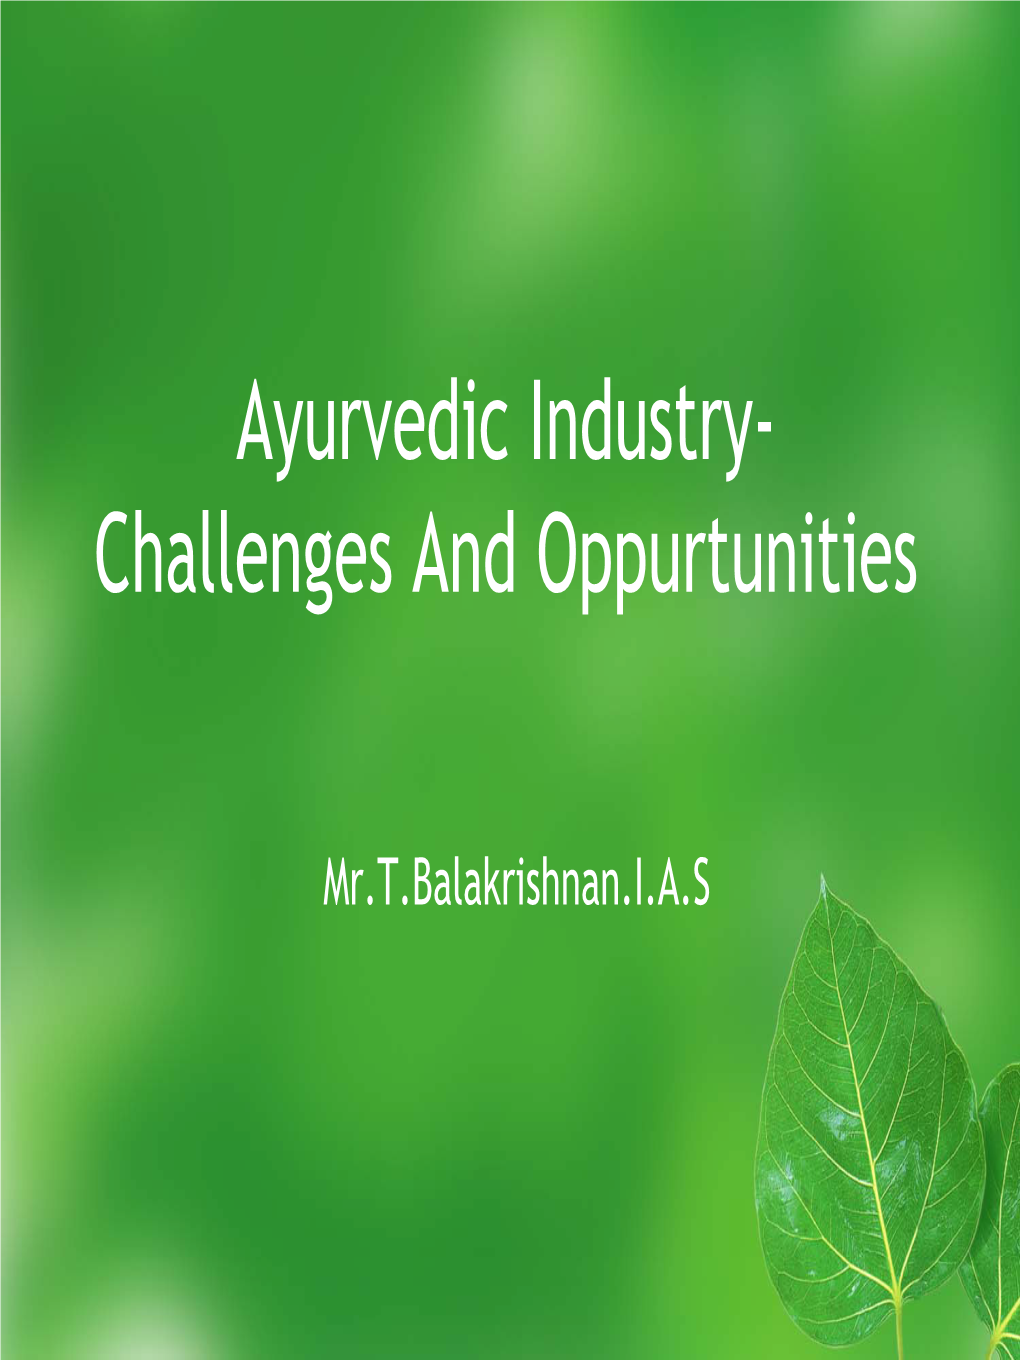 Ayurvedic Industry- Challenges and Oppurtunities